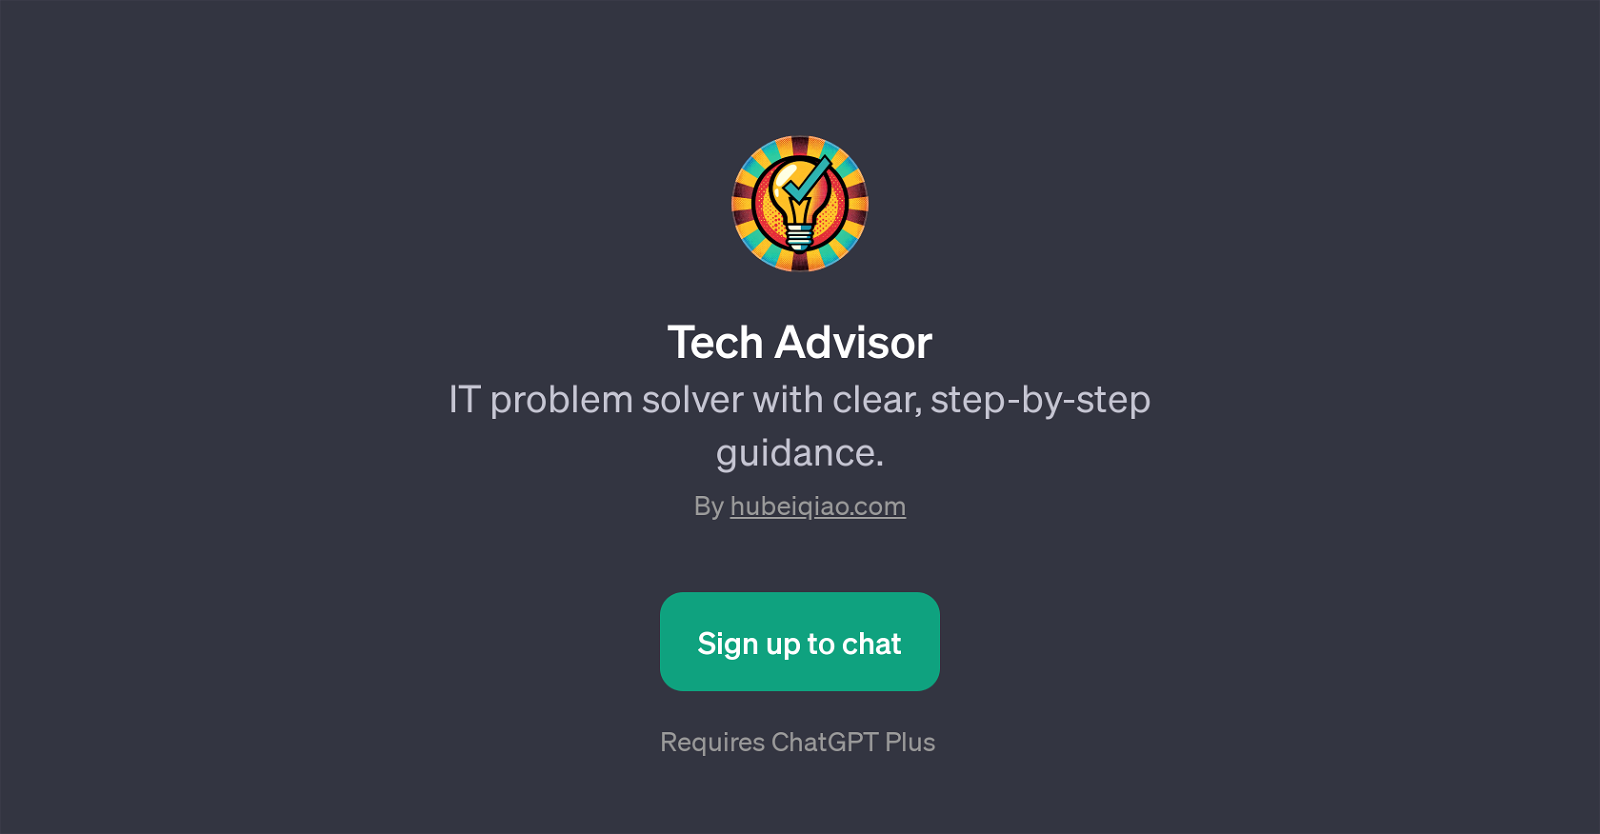 Tech Advisor website